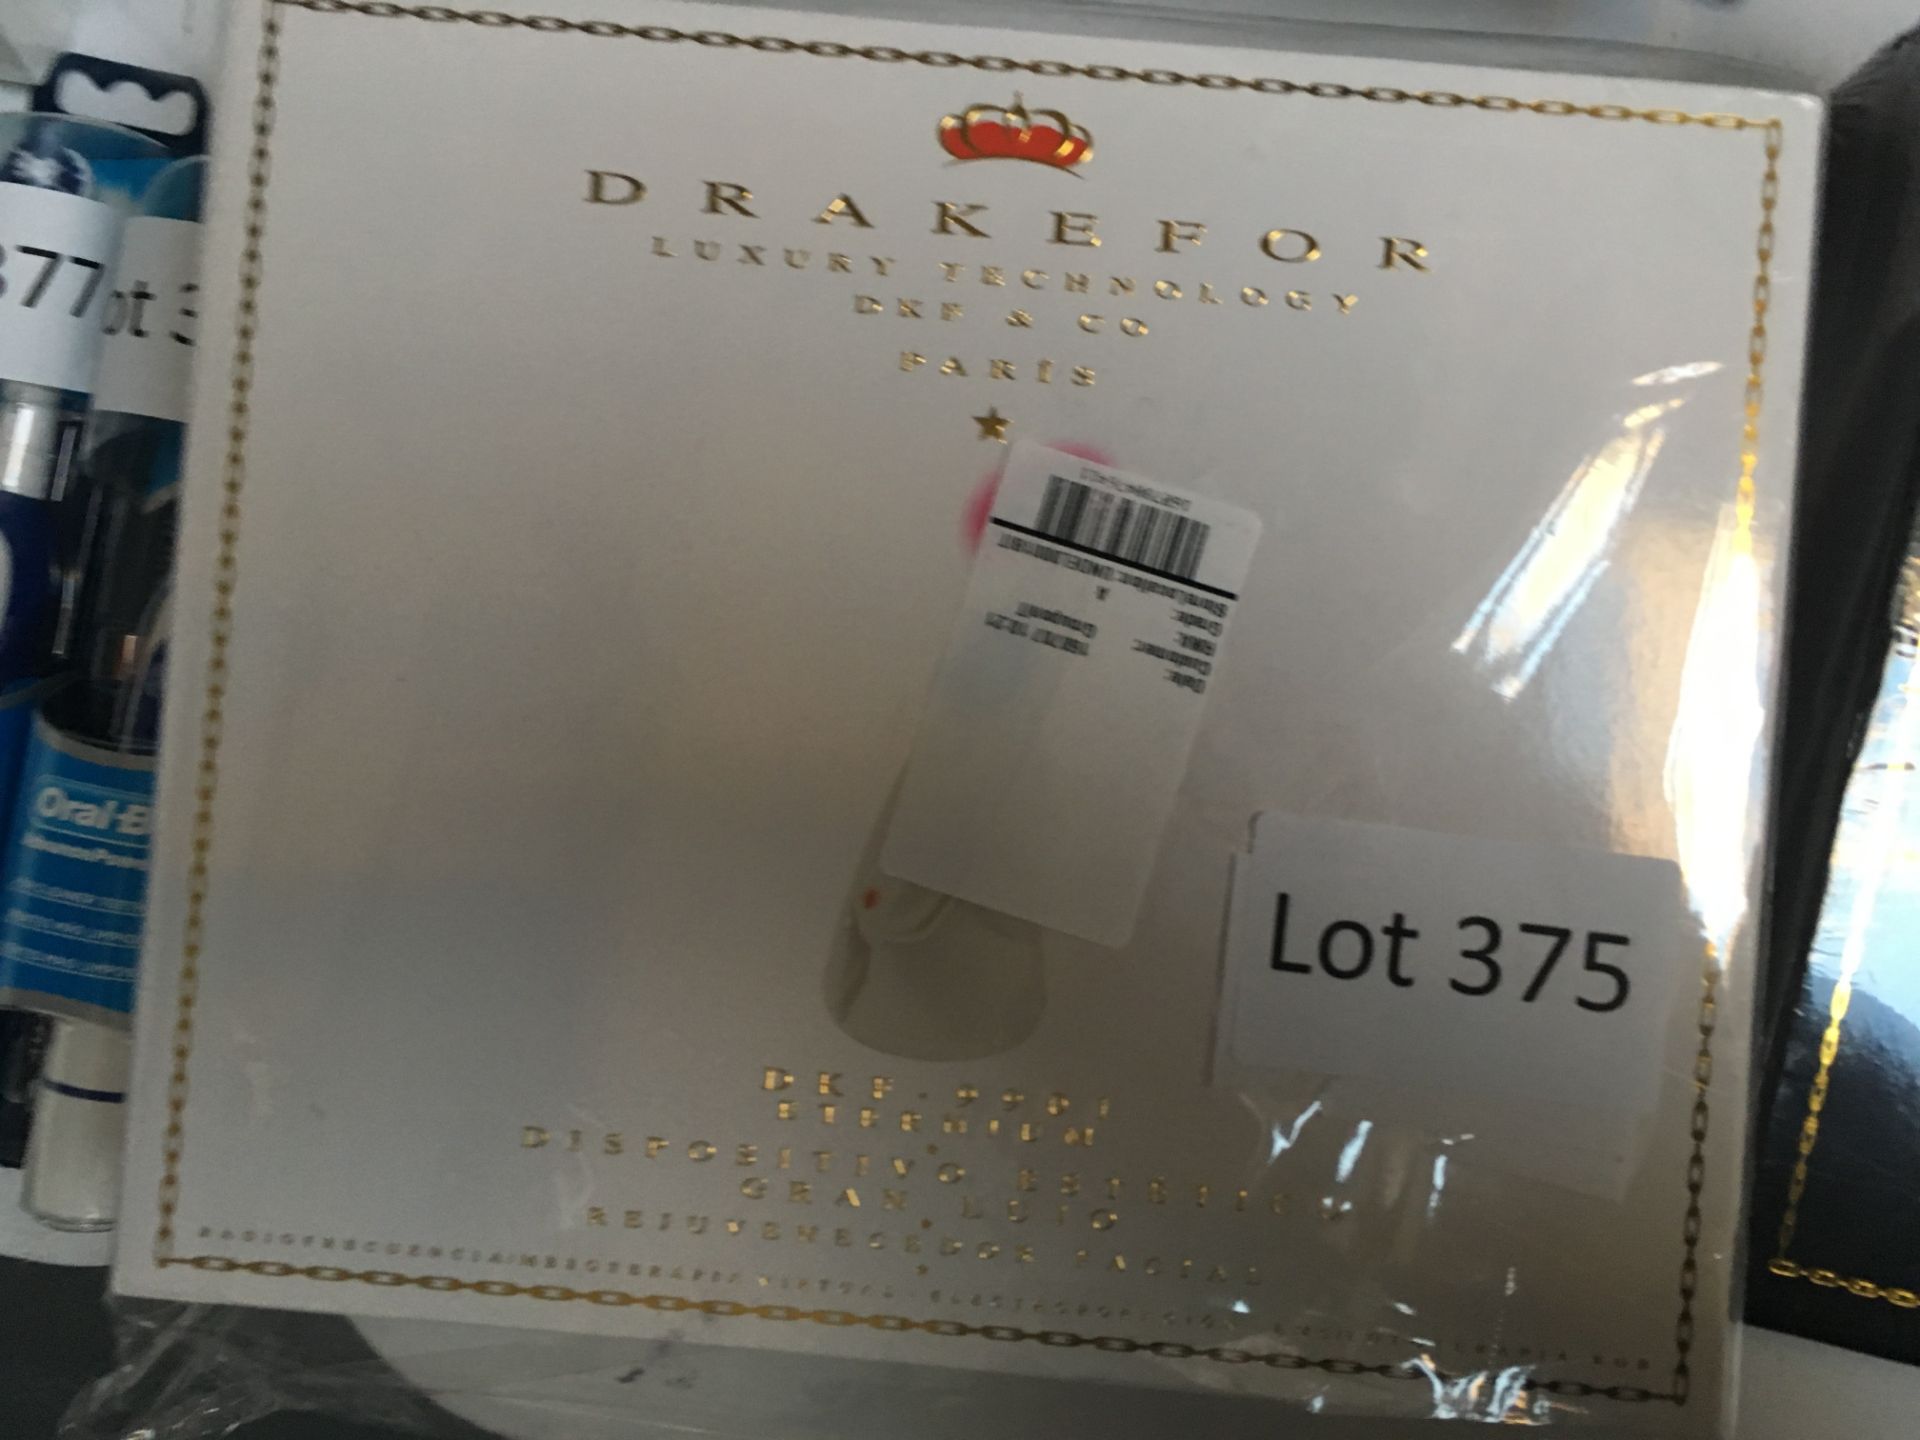 Drakefor 9901 rejuvenating facial lazer device. New in packaging.